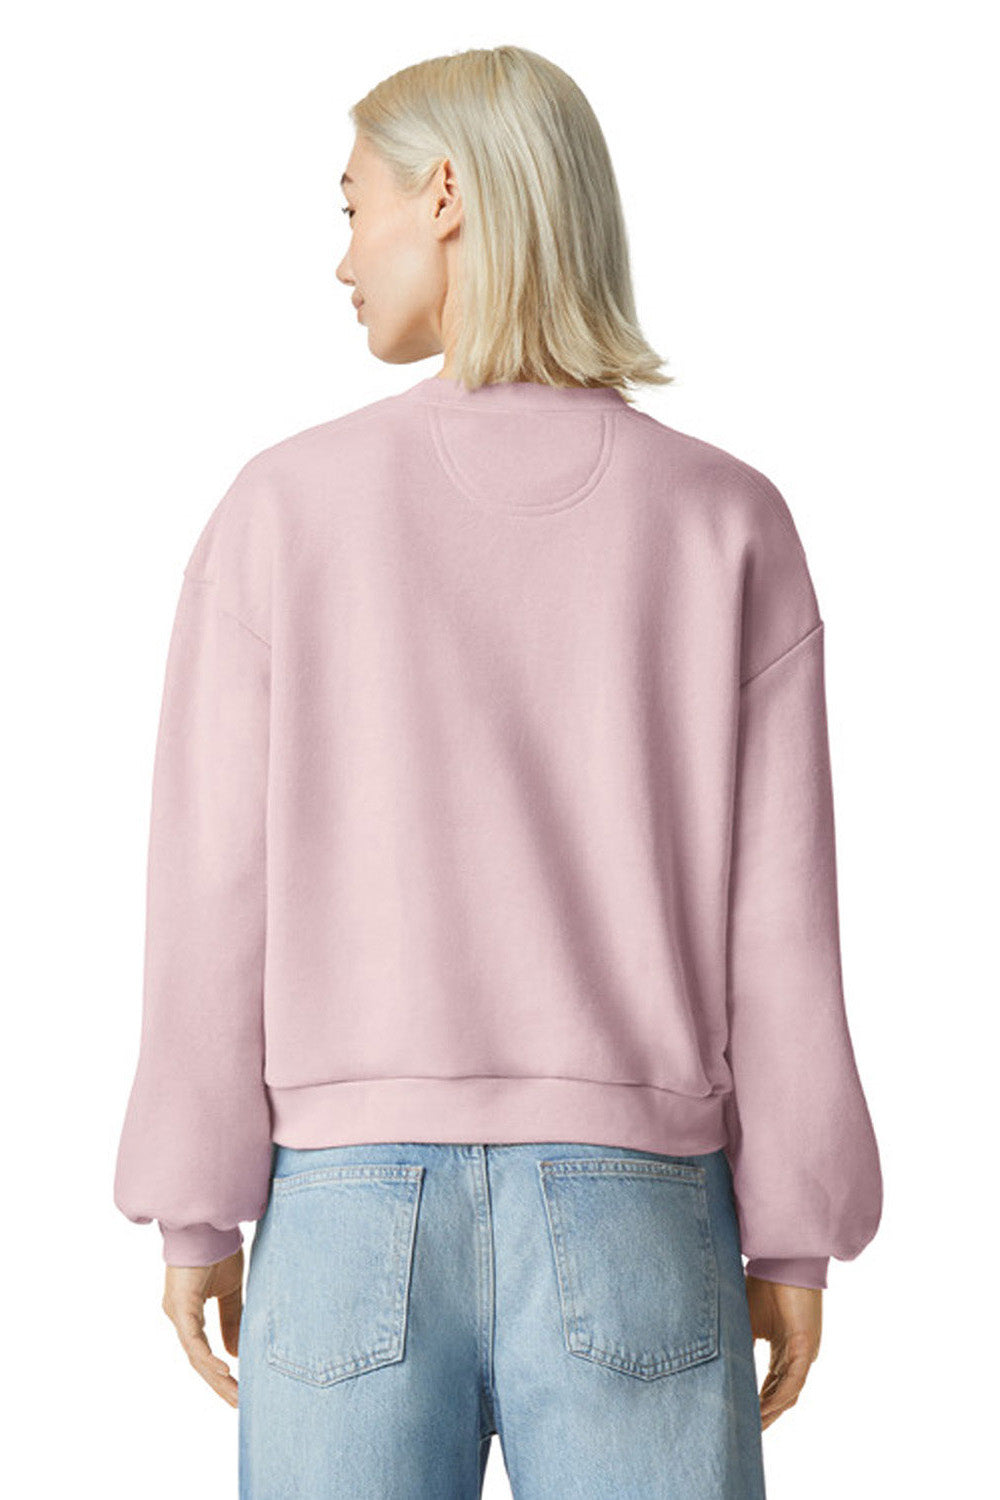 American Apparel RF494 Mens ReFlex Fleece Crewneck Sweatshirt Blush Pink Model Back